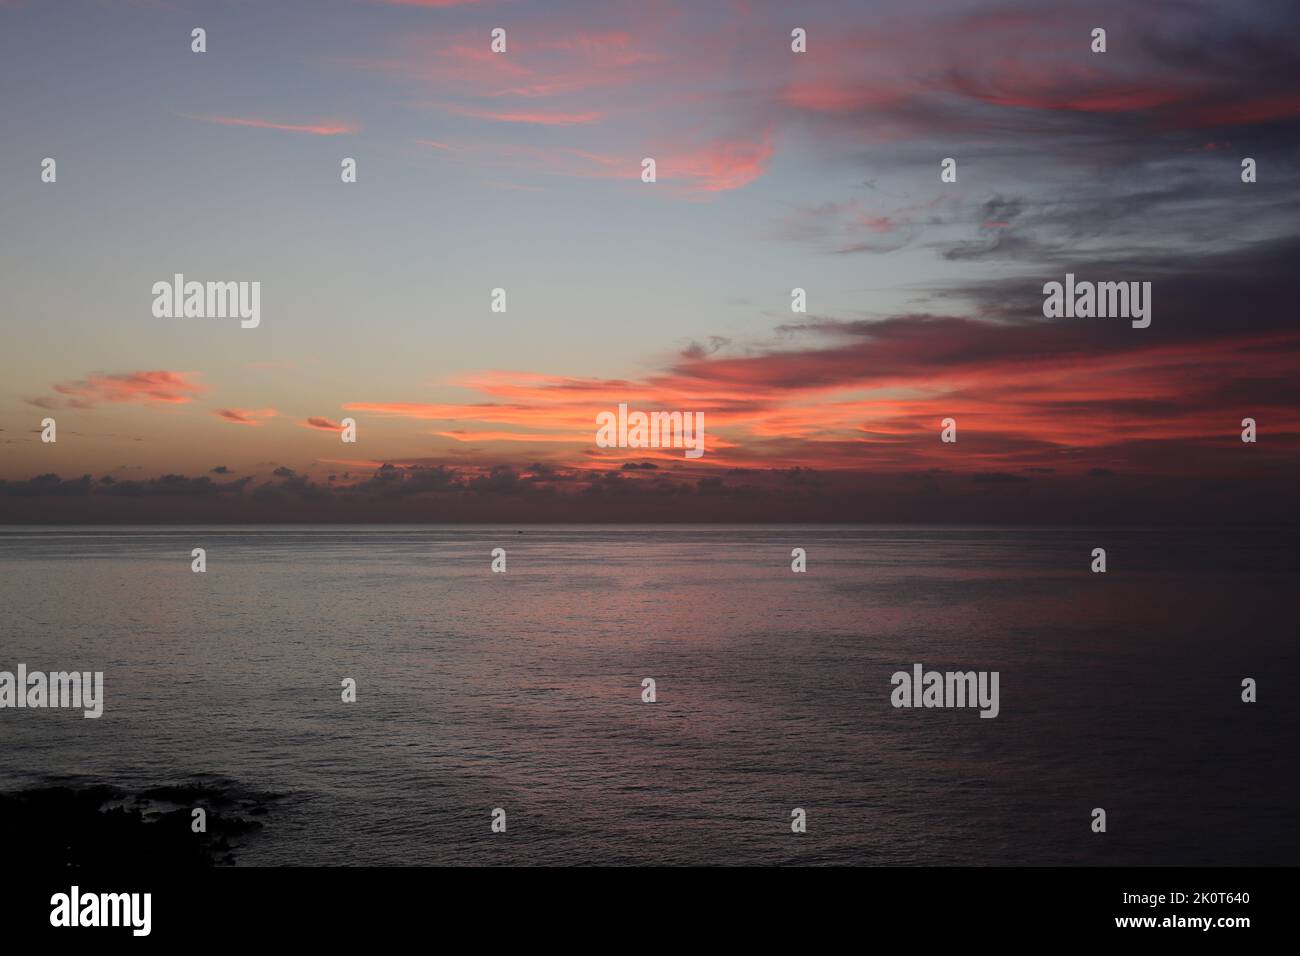 just before sunrise over the mediterranean sea Stock Photo